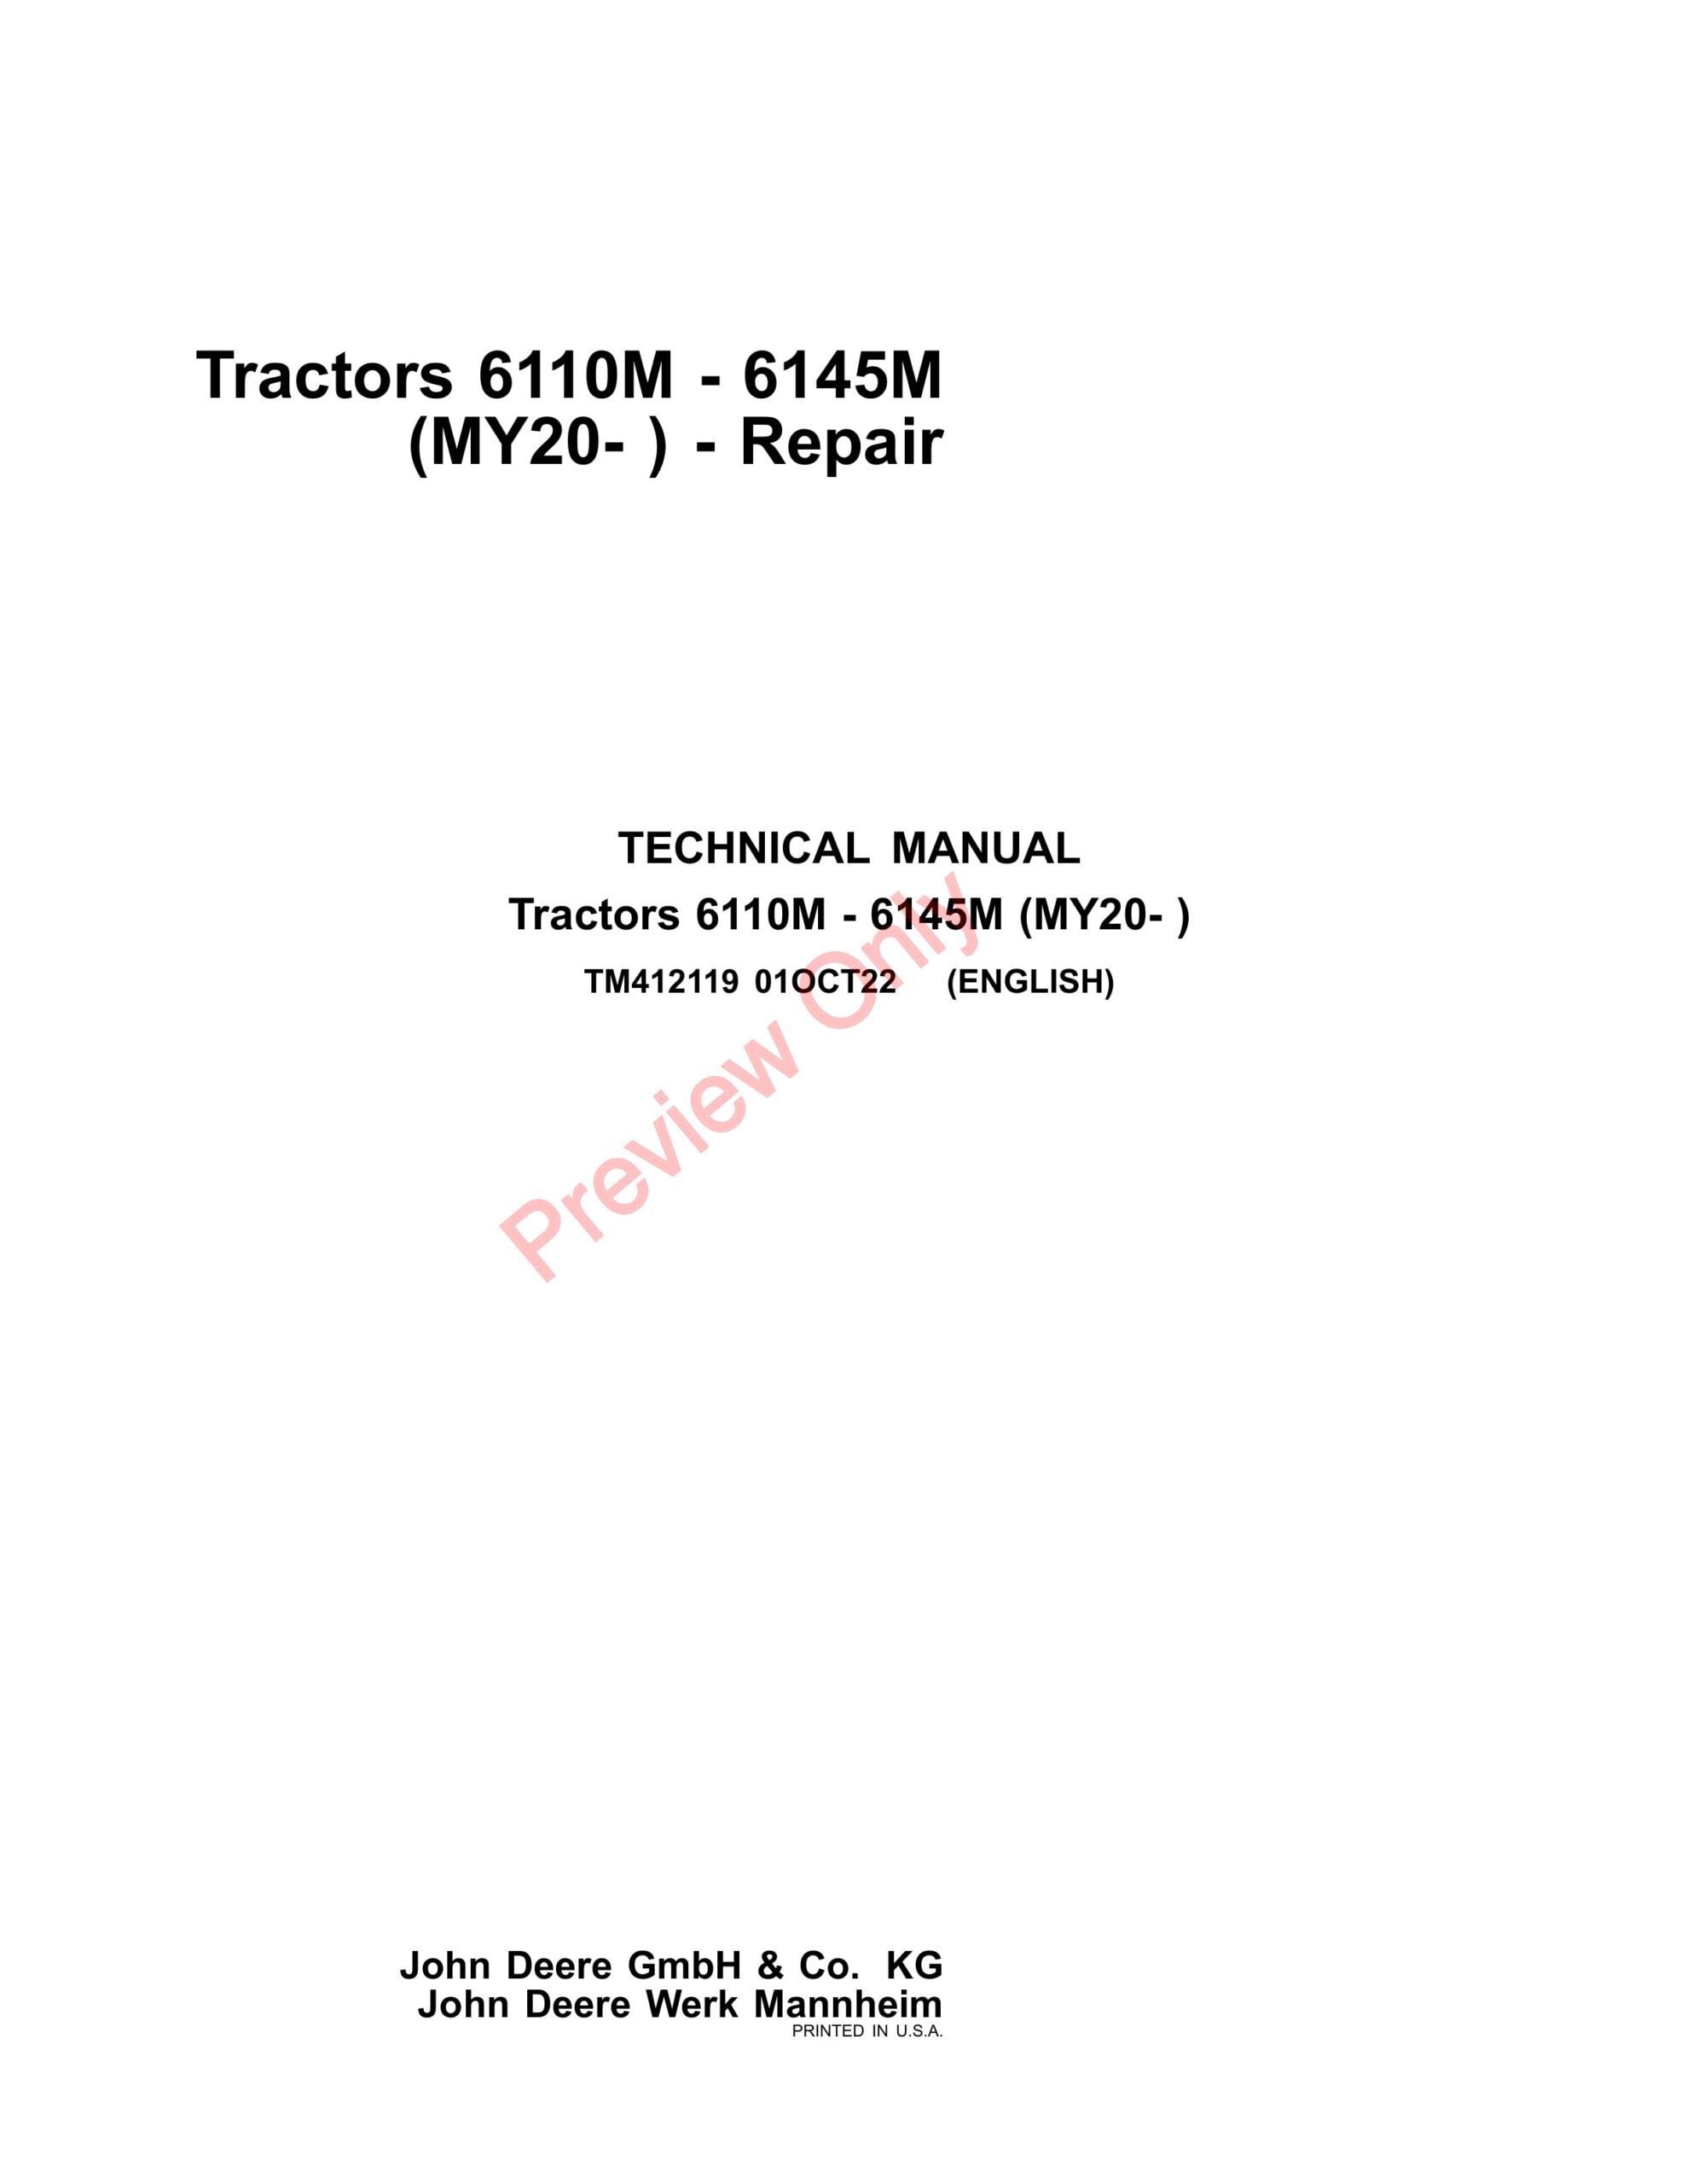 John Deere Tractors 6110M – 6145M (MY20- ) Technical Manual TM412119 01MAR23-1